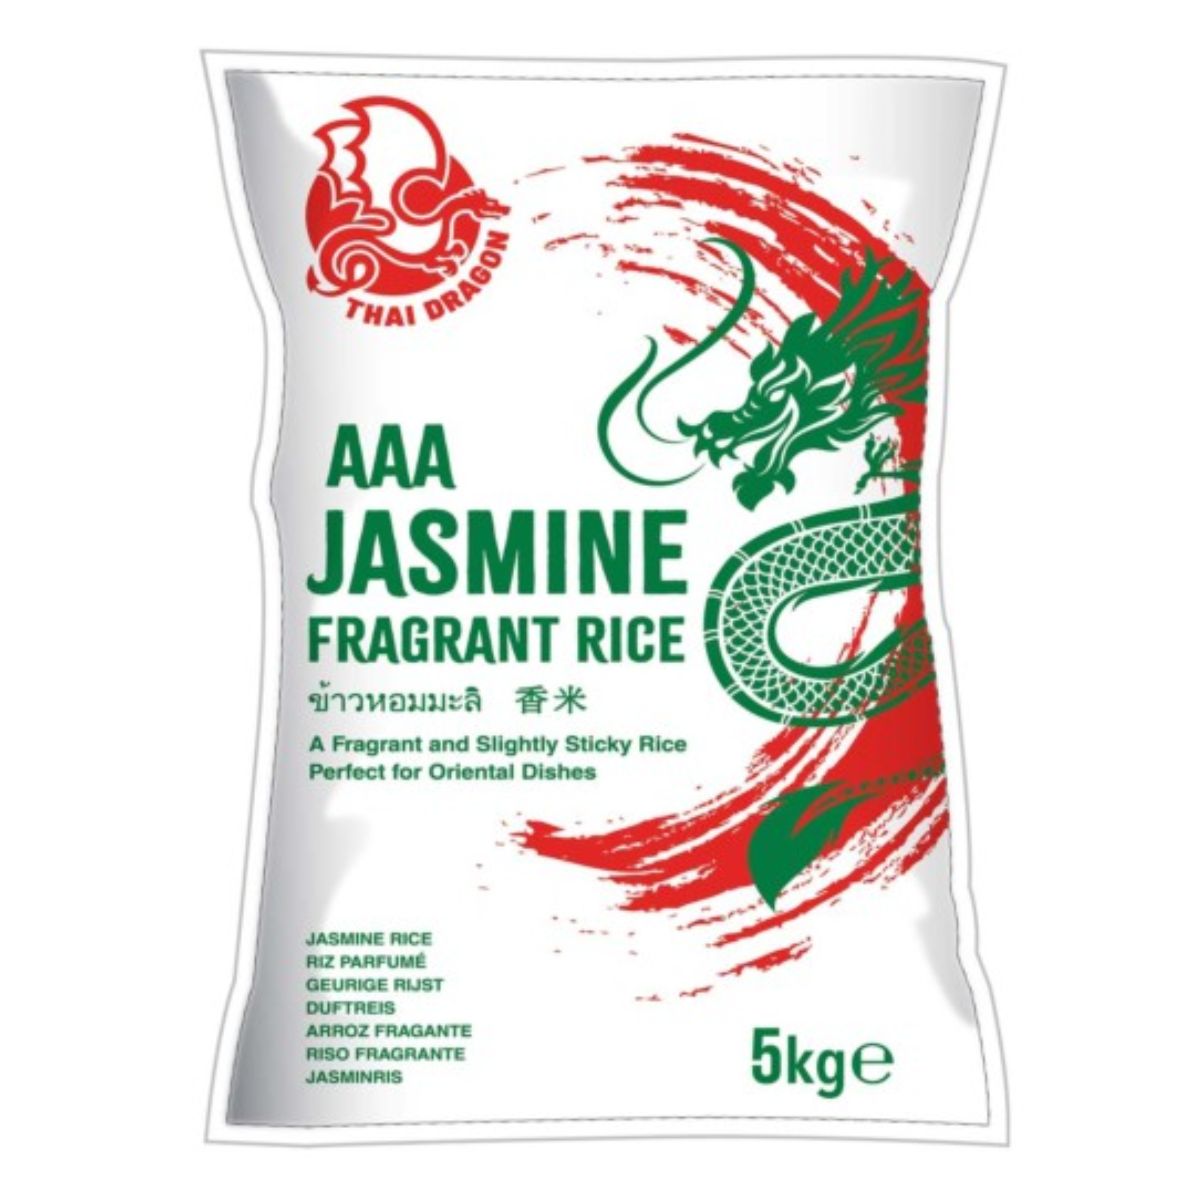 Thai Dragon - AAA Jasmine Rice - 5kg jasmine fragrant rice.